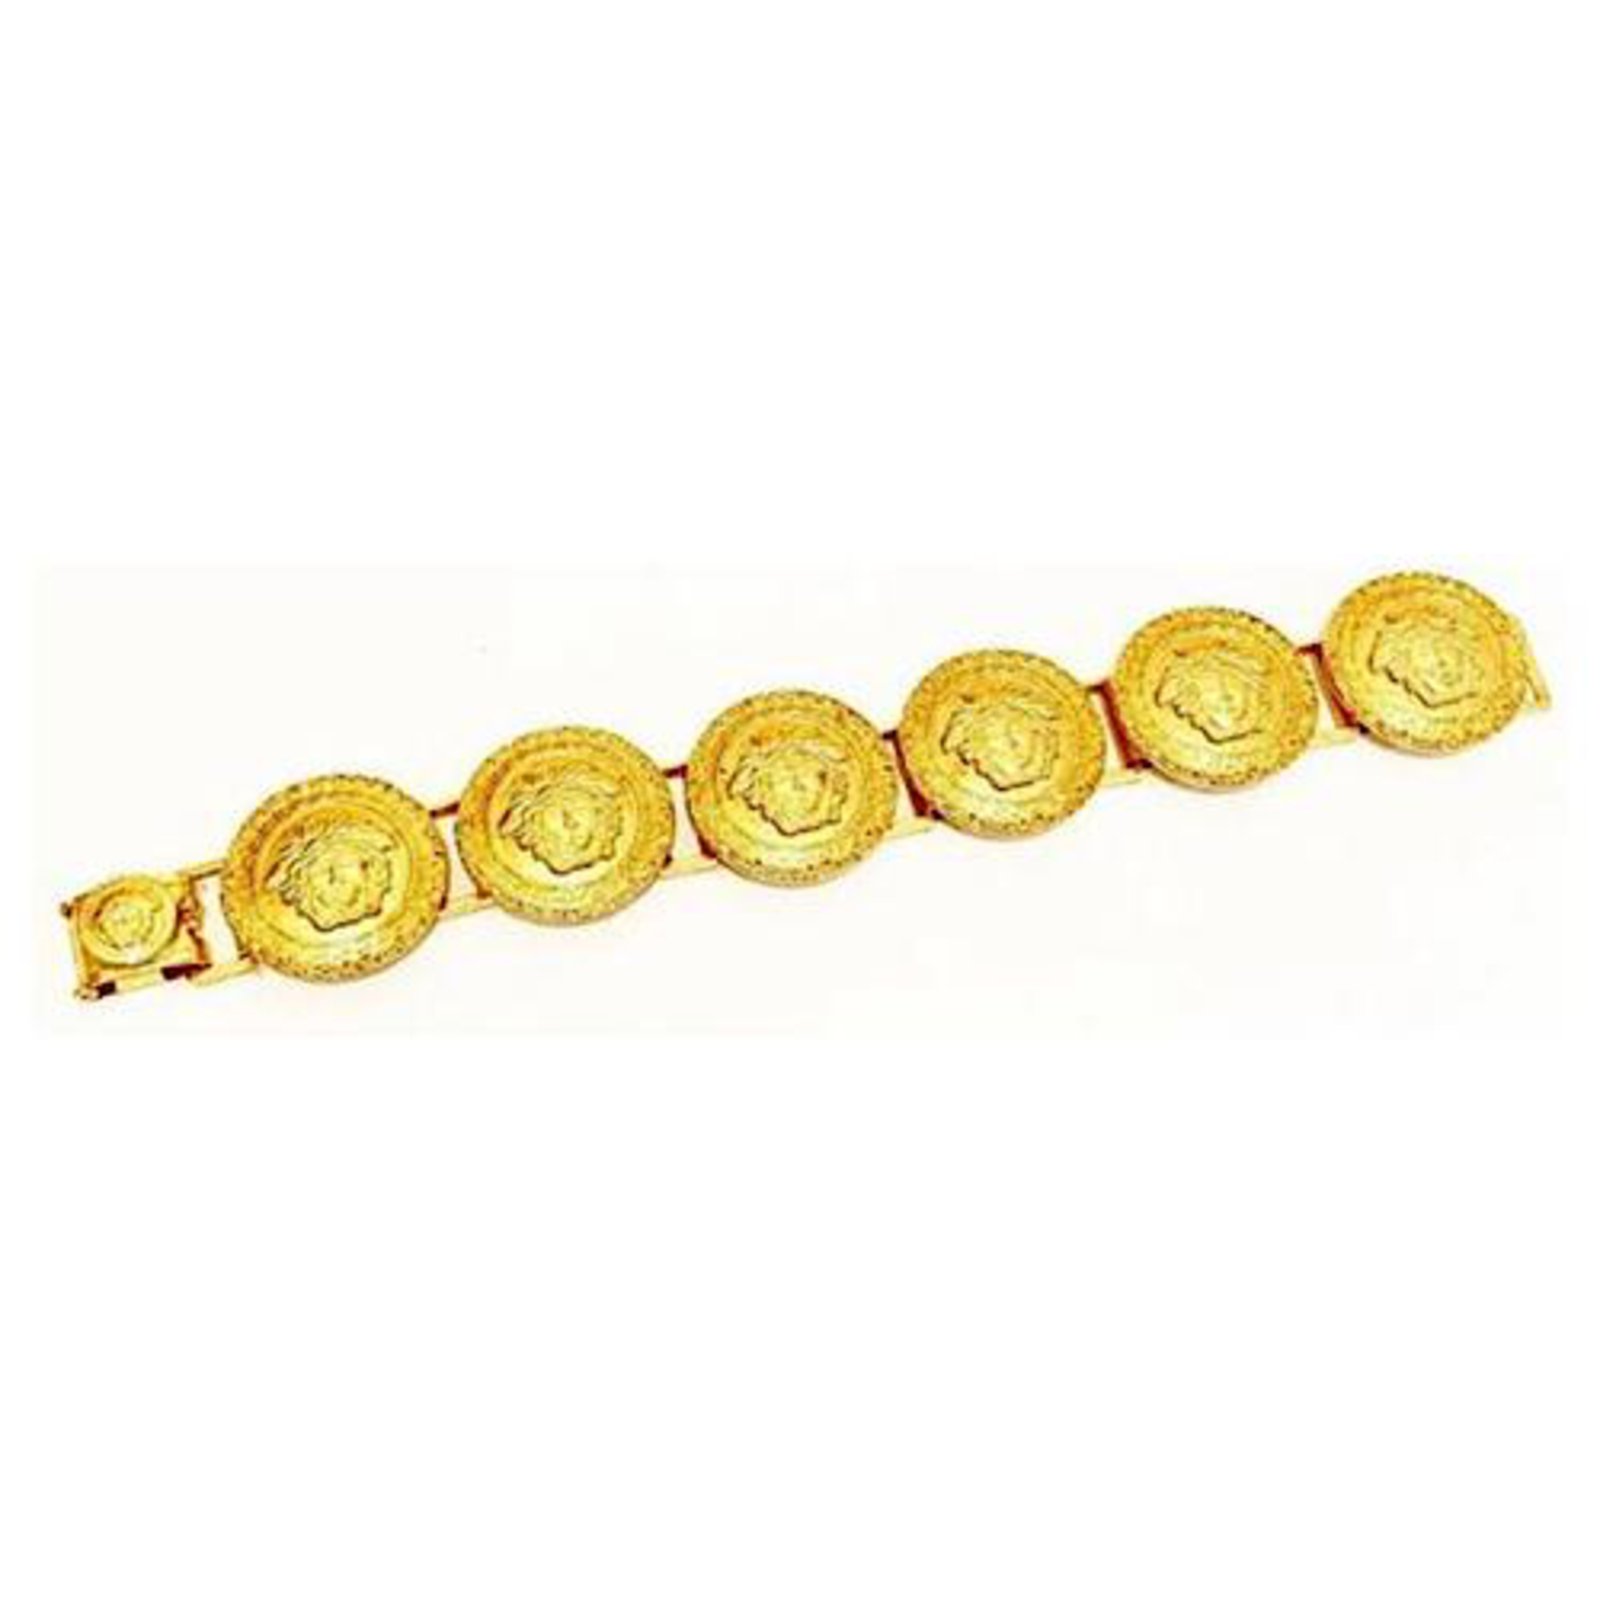 Bracelet Gianni Versace Gold in Metal - 29330324